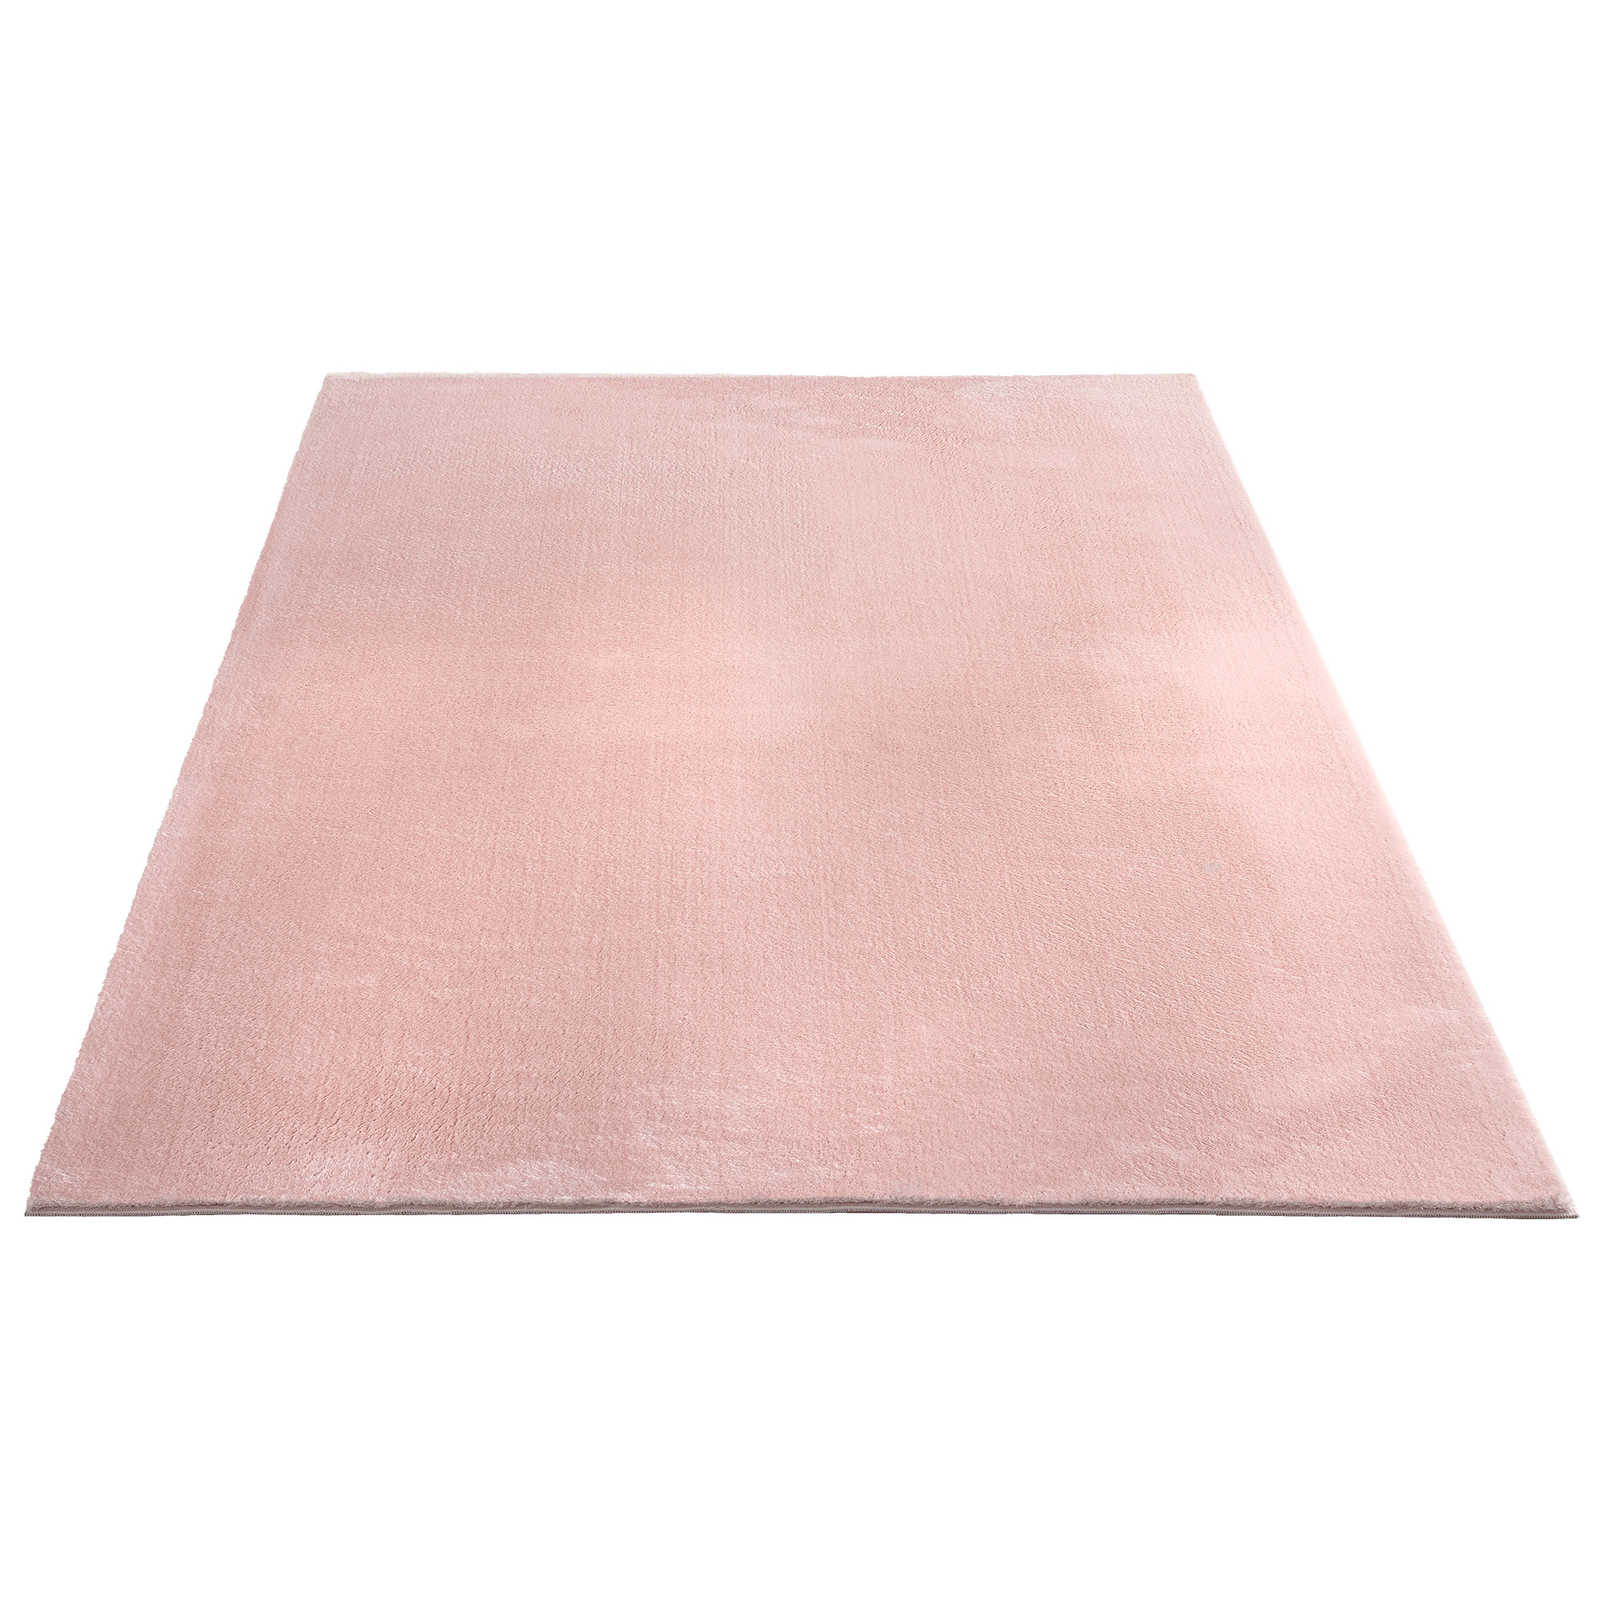 Delicate pile carpet in pink - 340 x 240 cm
